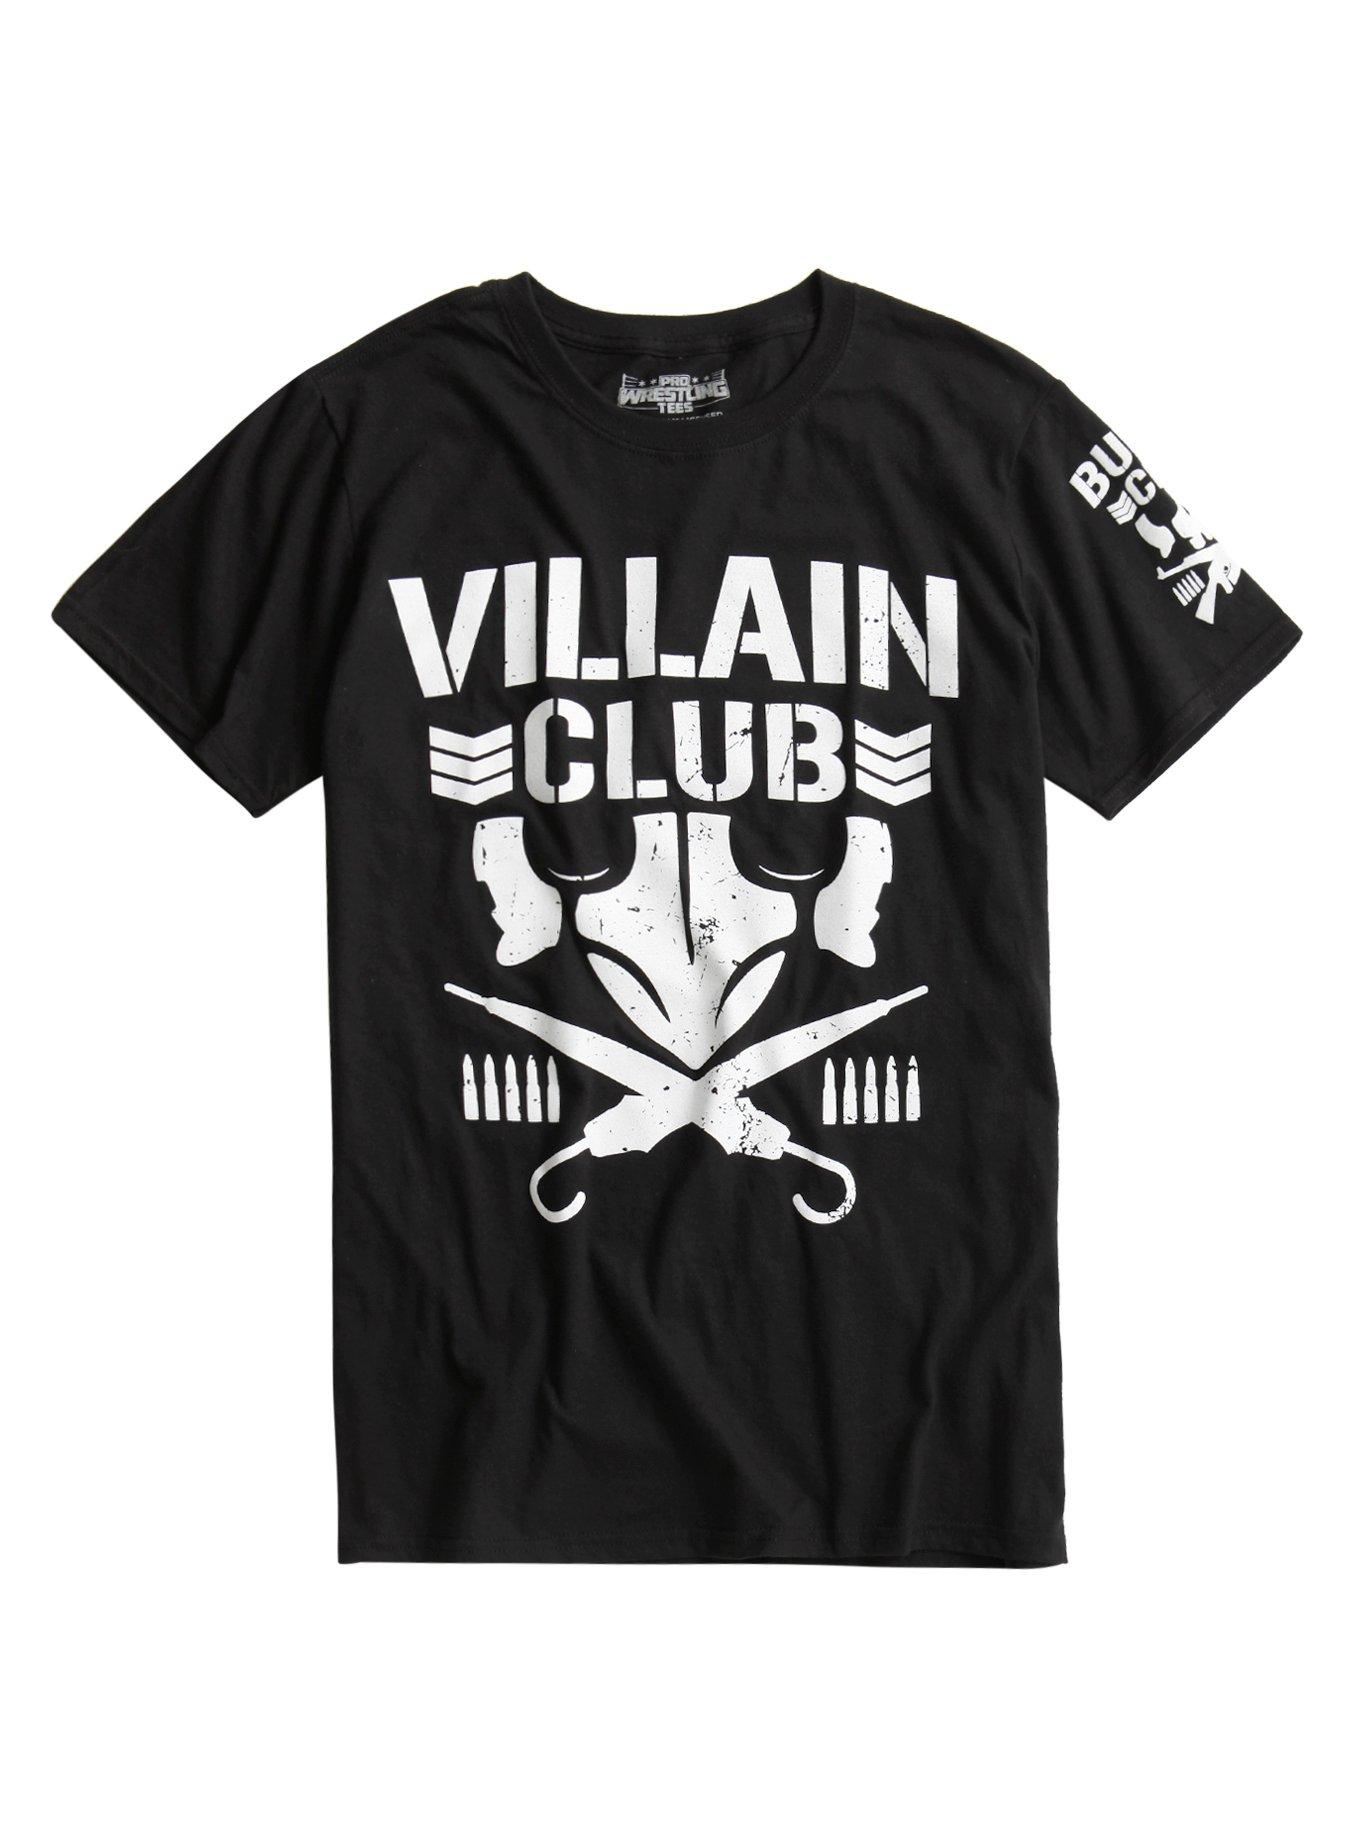 New Japan Pro-Wrestling Bullet Club Villain Club Logo T-Shirt